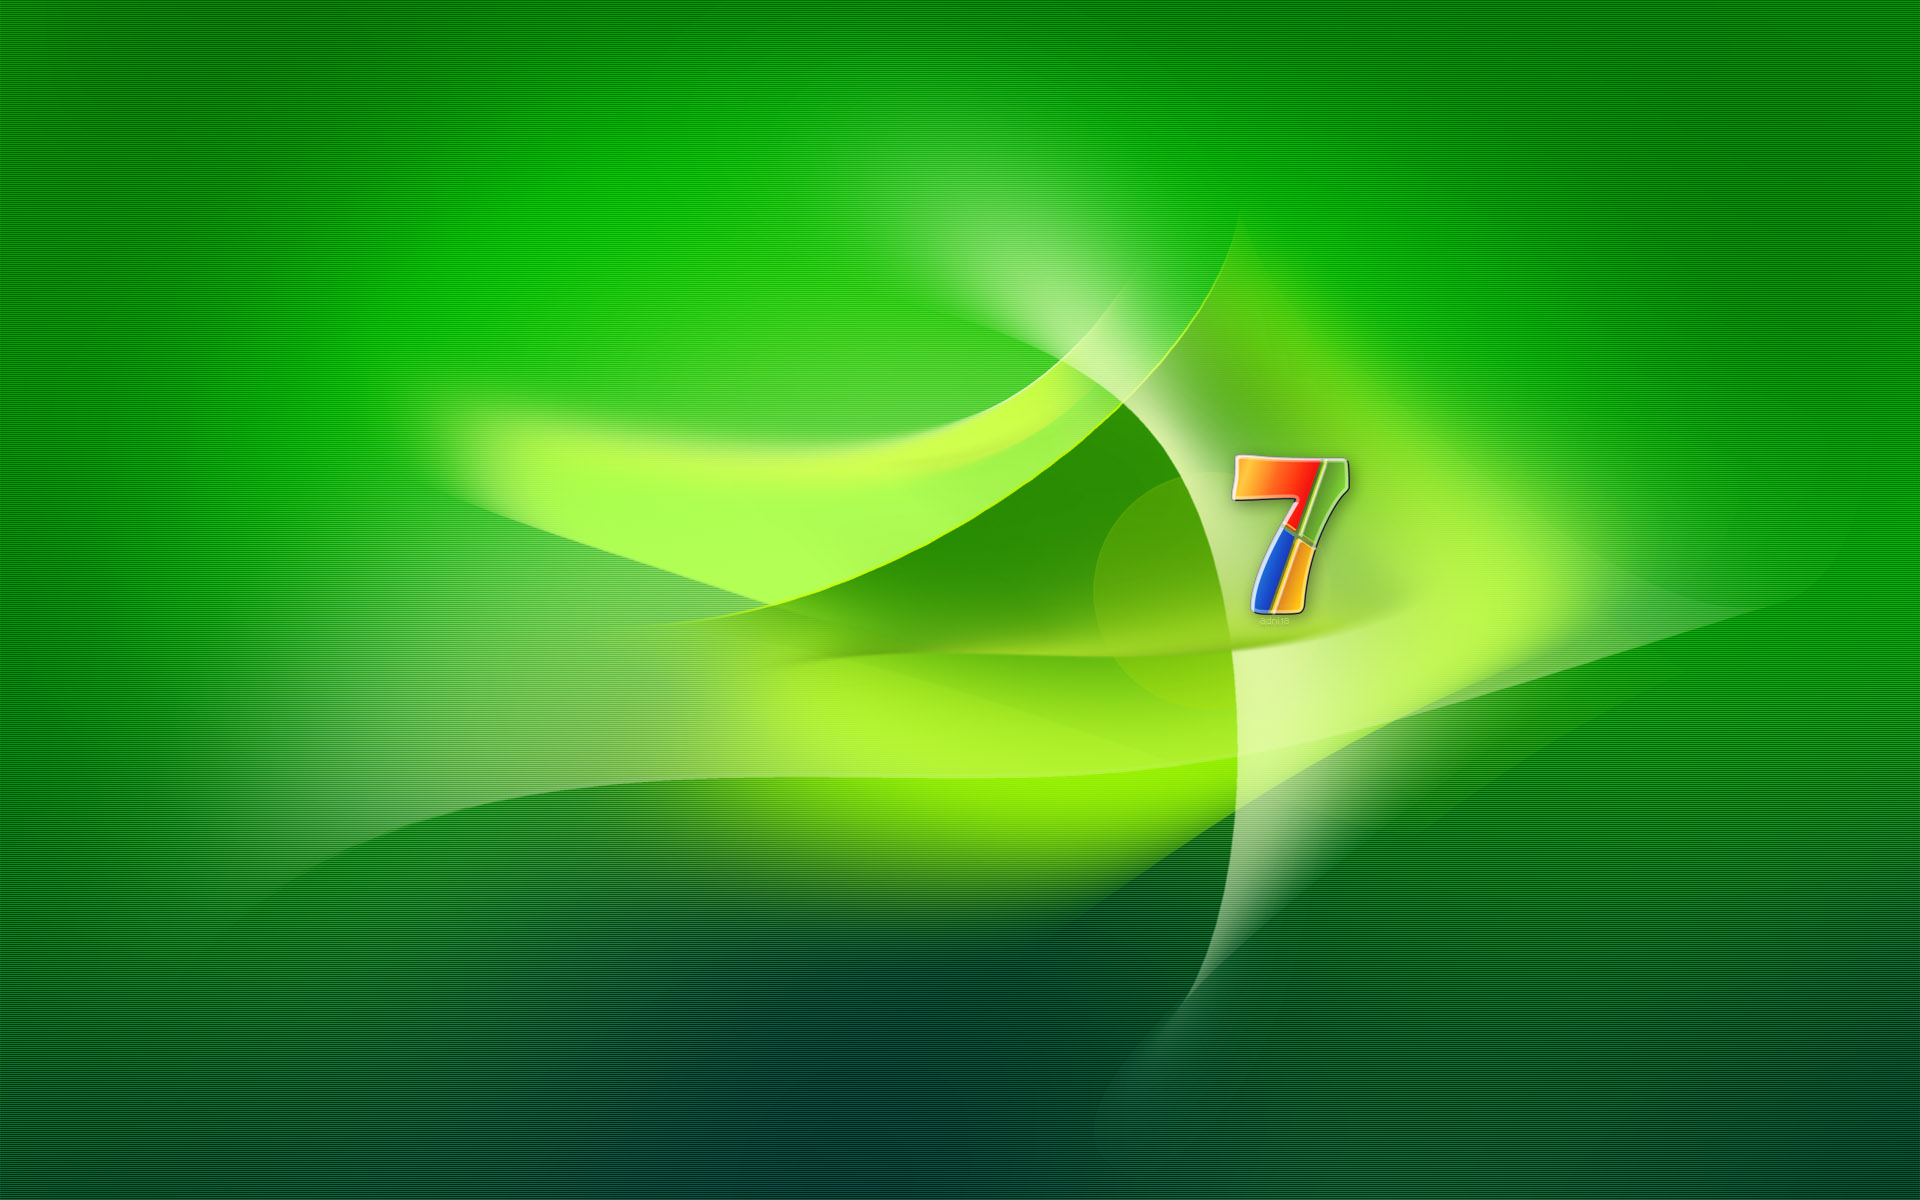  Windows Seven ::  2